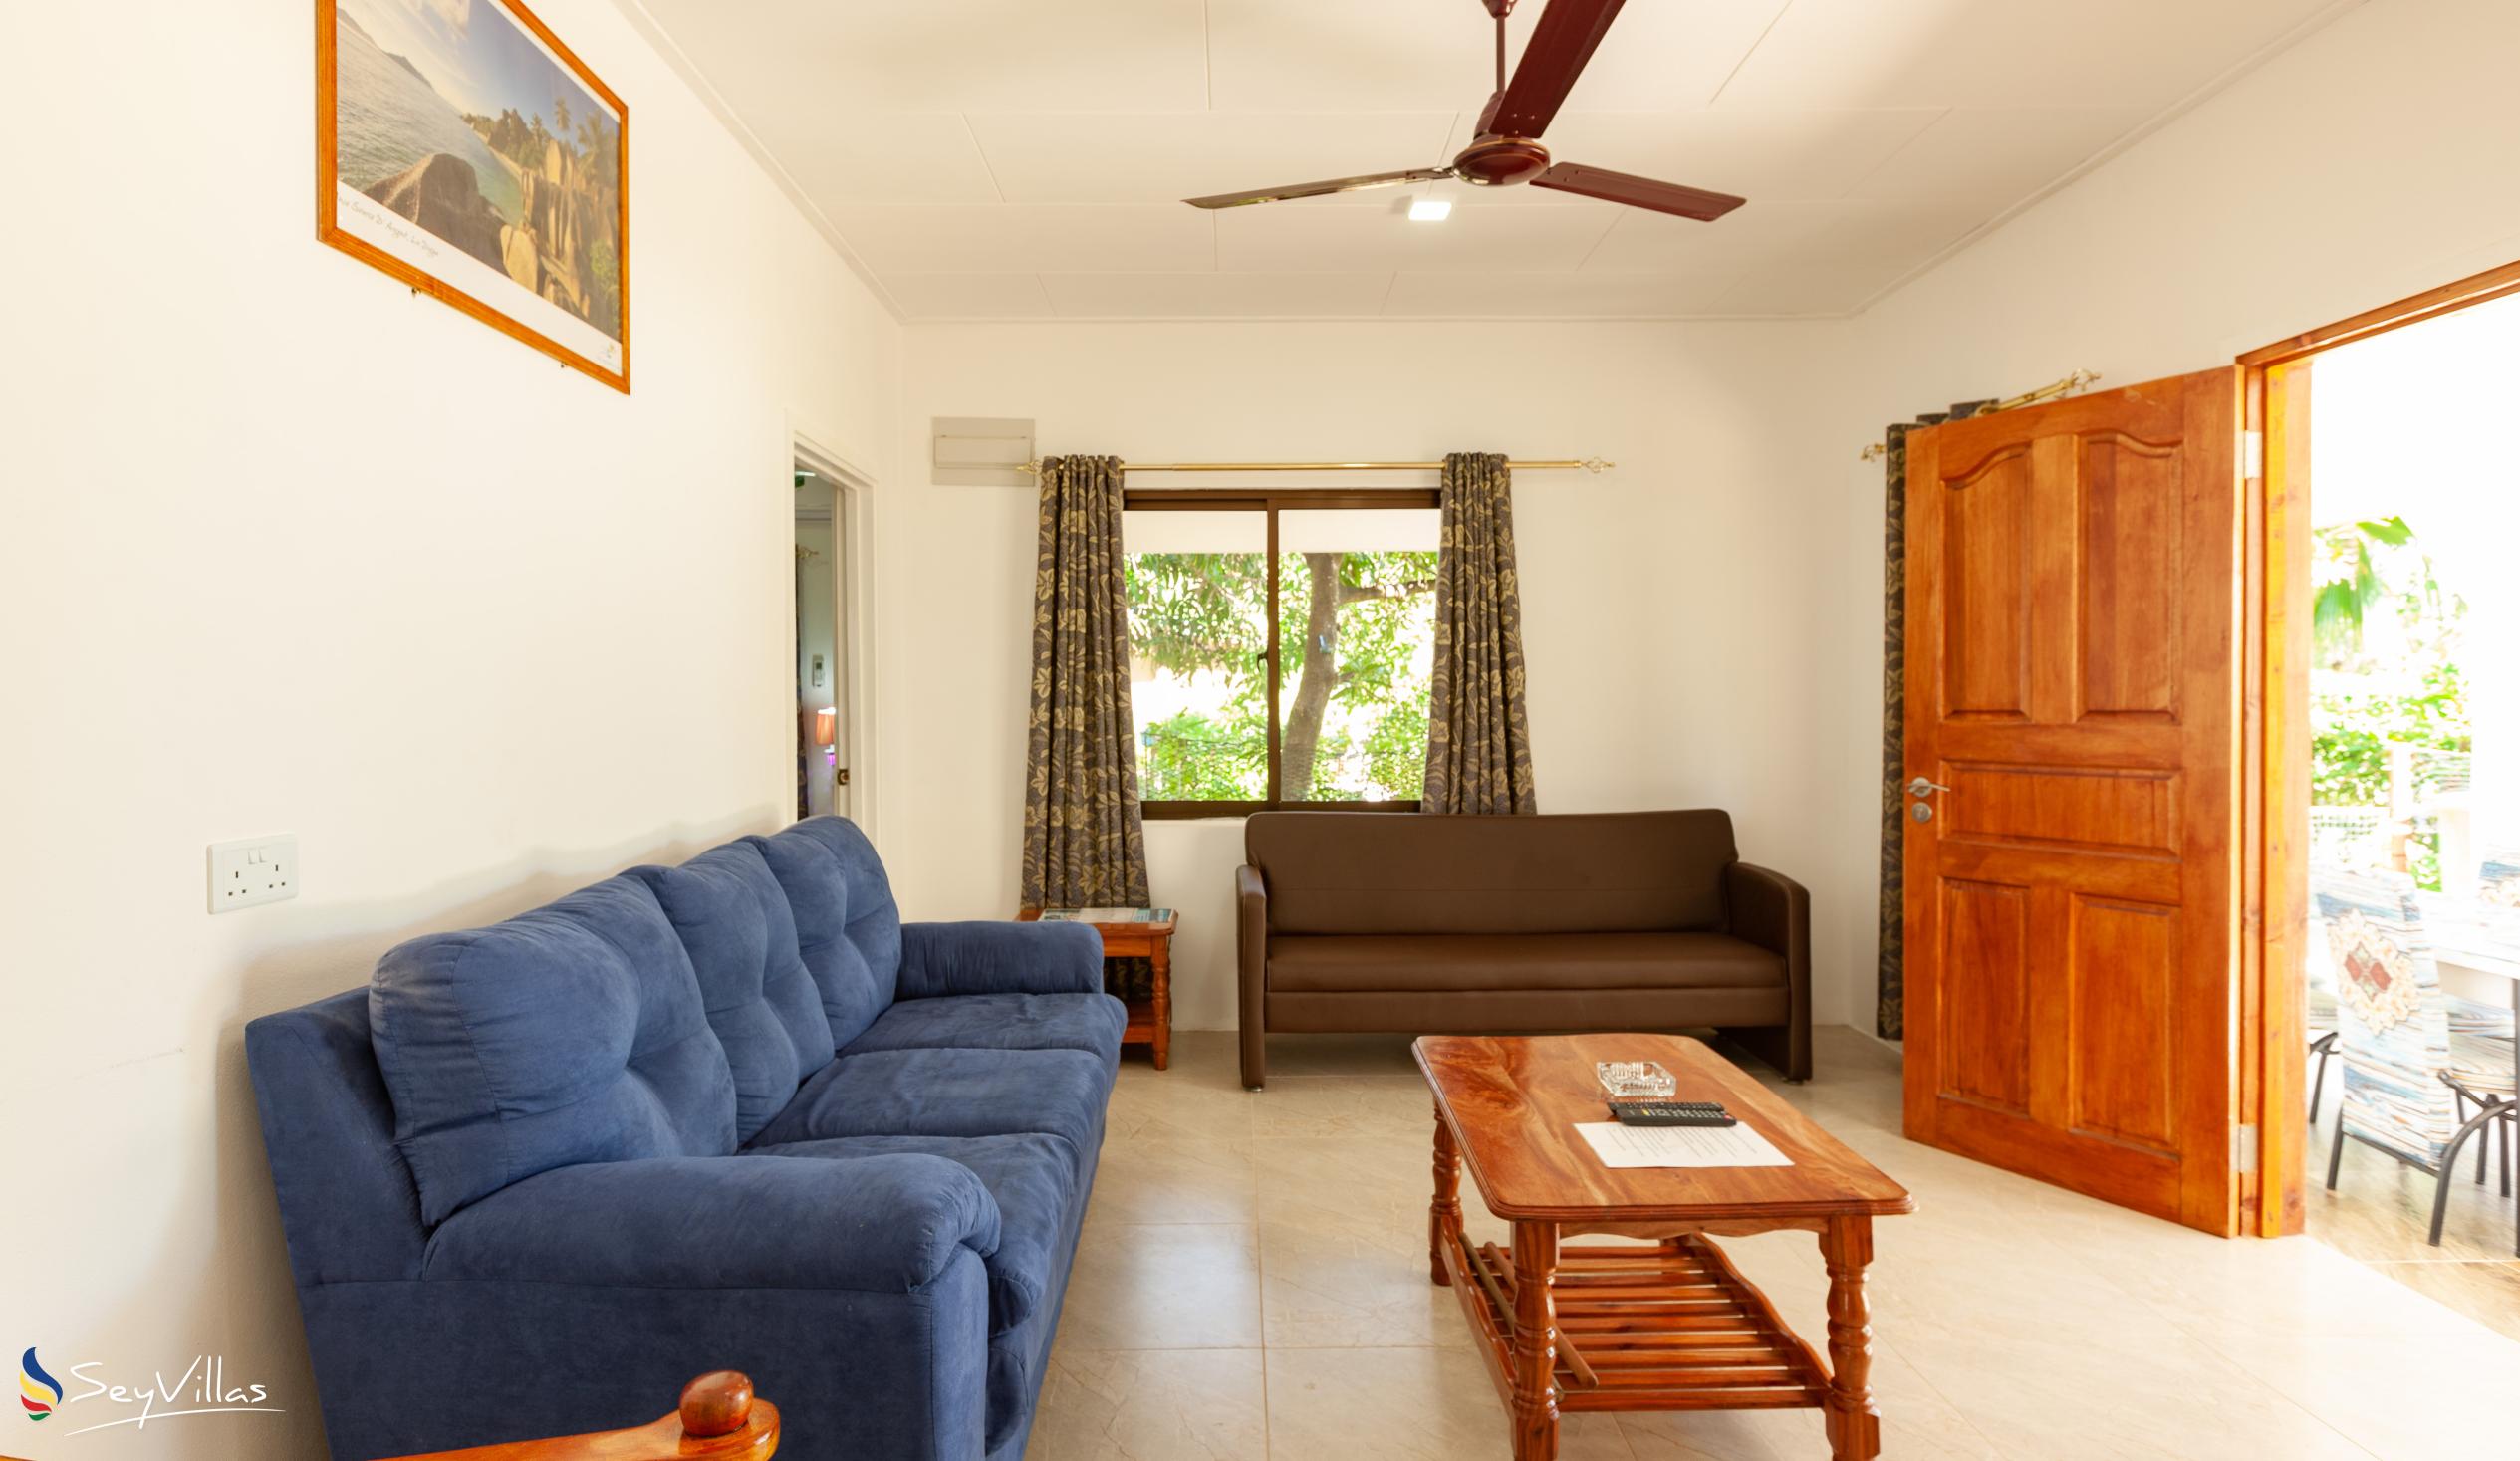 Foto 44: Anse Grosse Roche Beach Villa - Familienappartement mit 2 Schlafzimmern - La Digue (Seychellen)